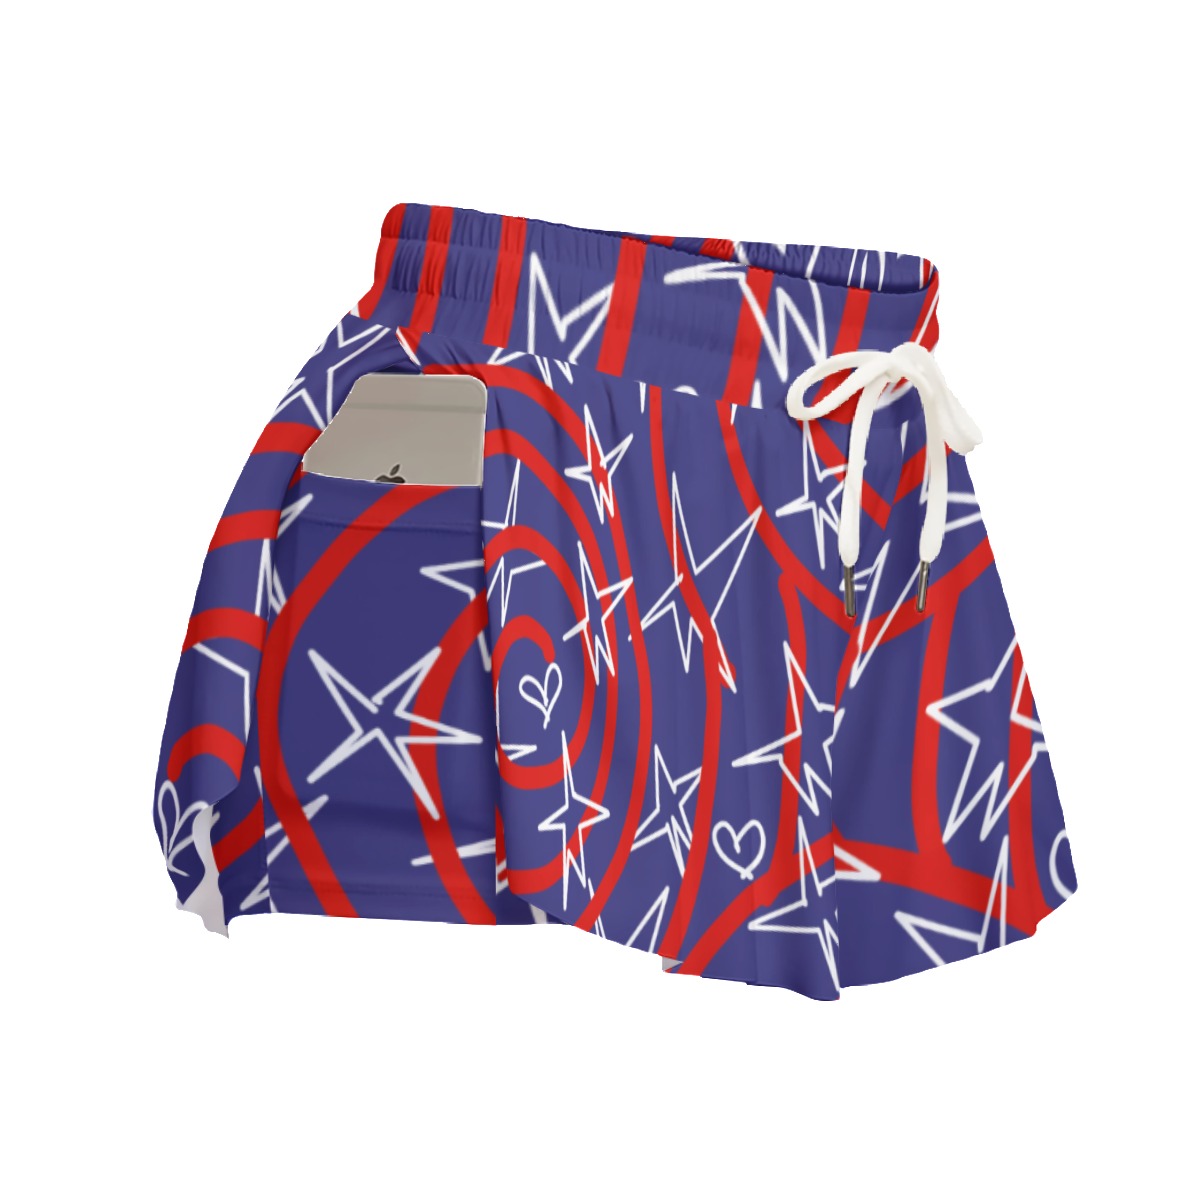 America inspired Women's Sport Skorts With Pocket. Short. Skirt. Design hand-painted by the Designer Maria Alejandra Echenique.